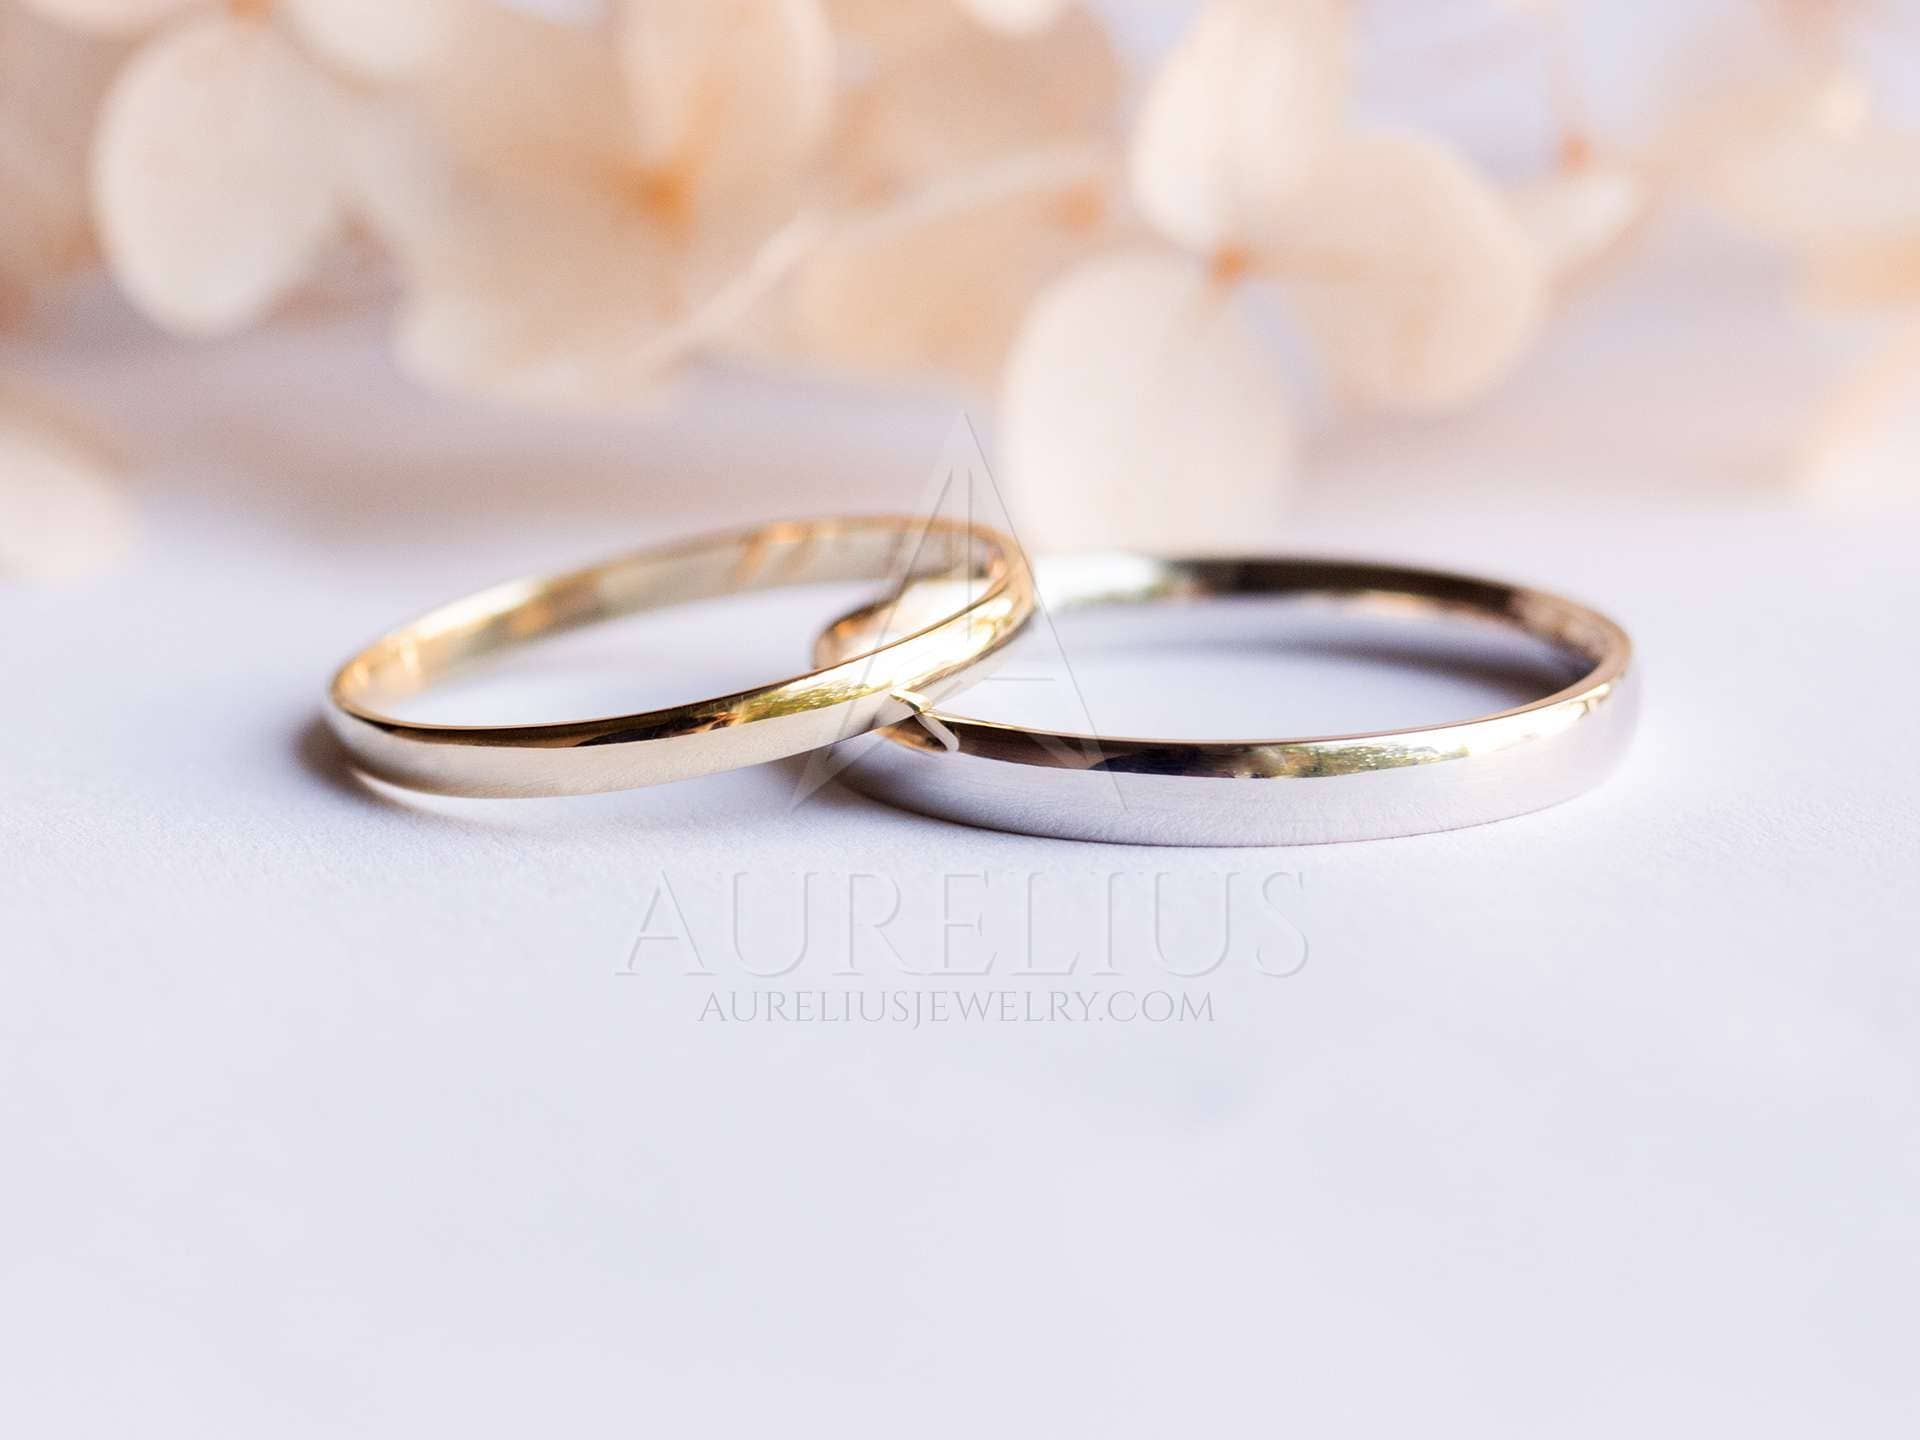 Buy Diamond Couple Ring Elegant Classic Engagement Ring Couple Rings 2 PCS  at Amazon.in